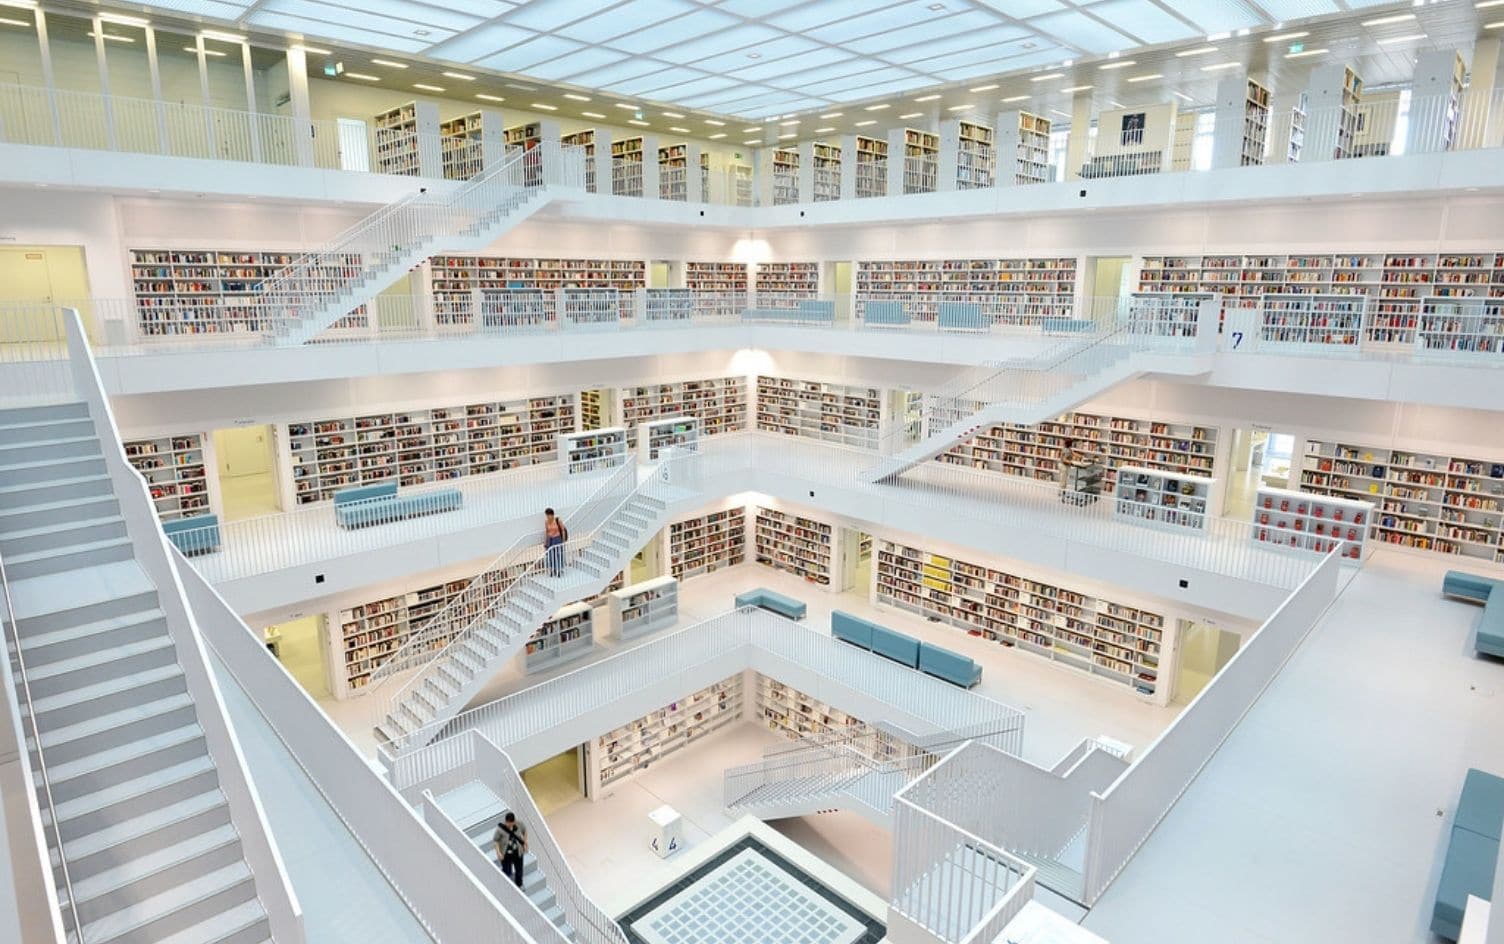 12 beautiful libraries around the world